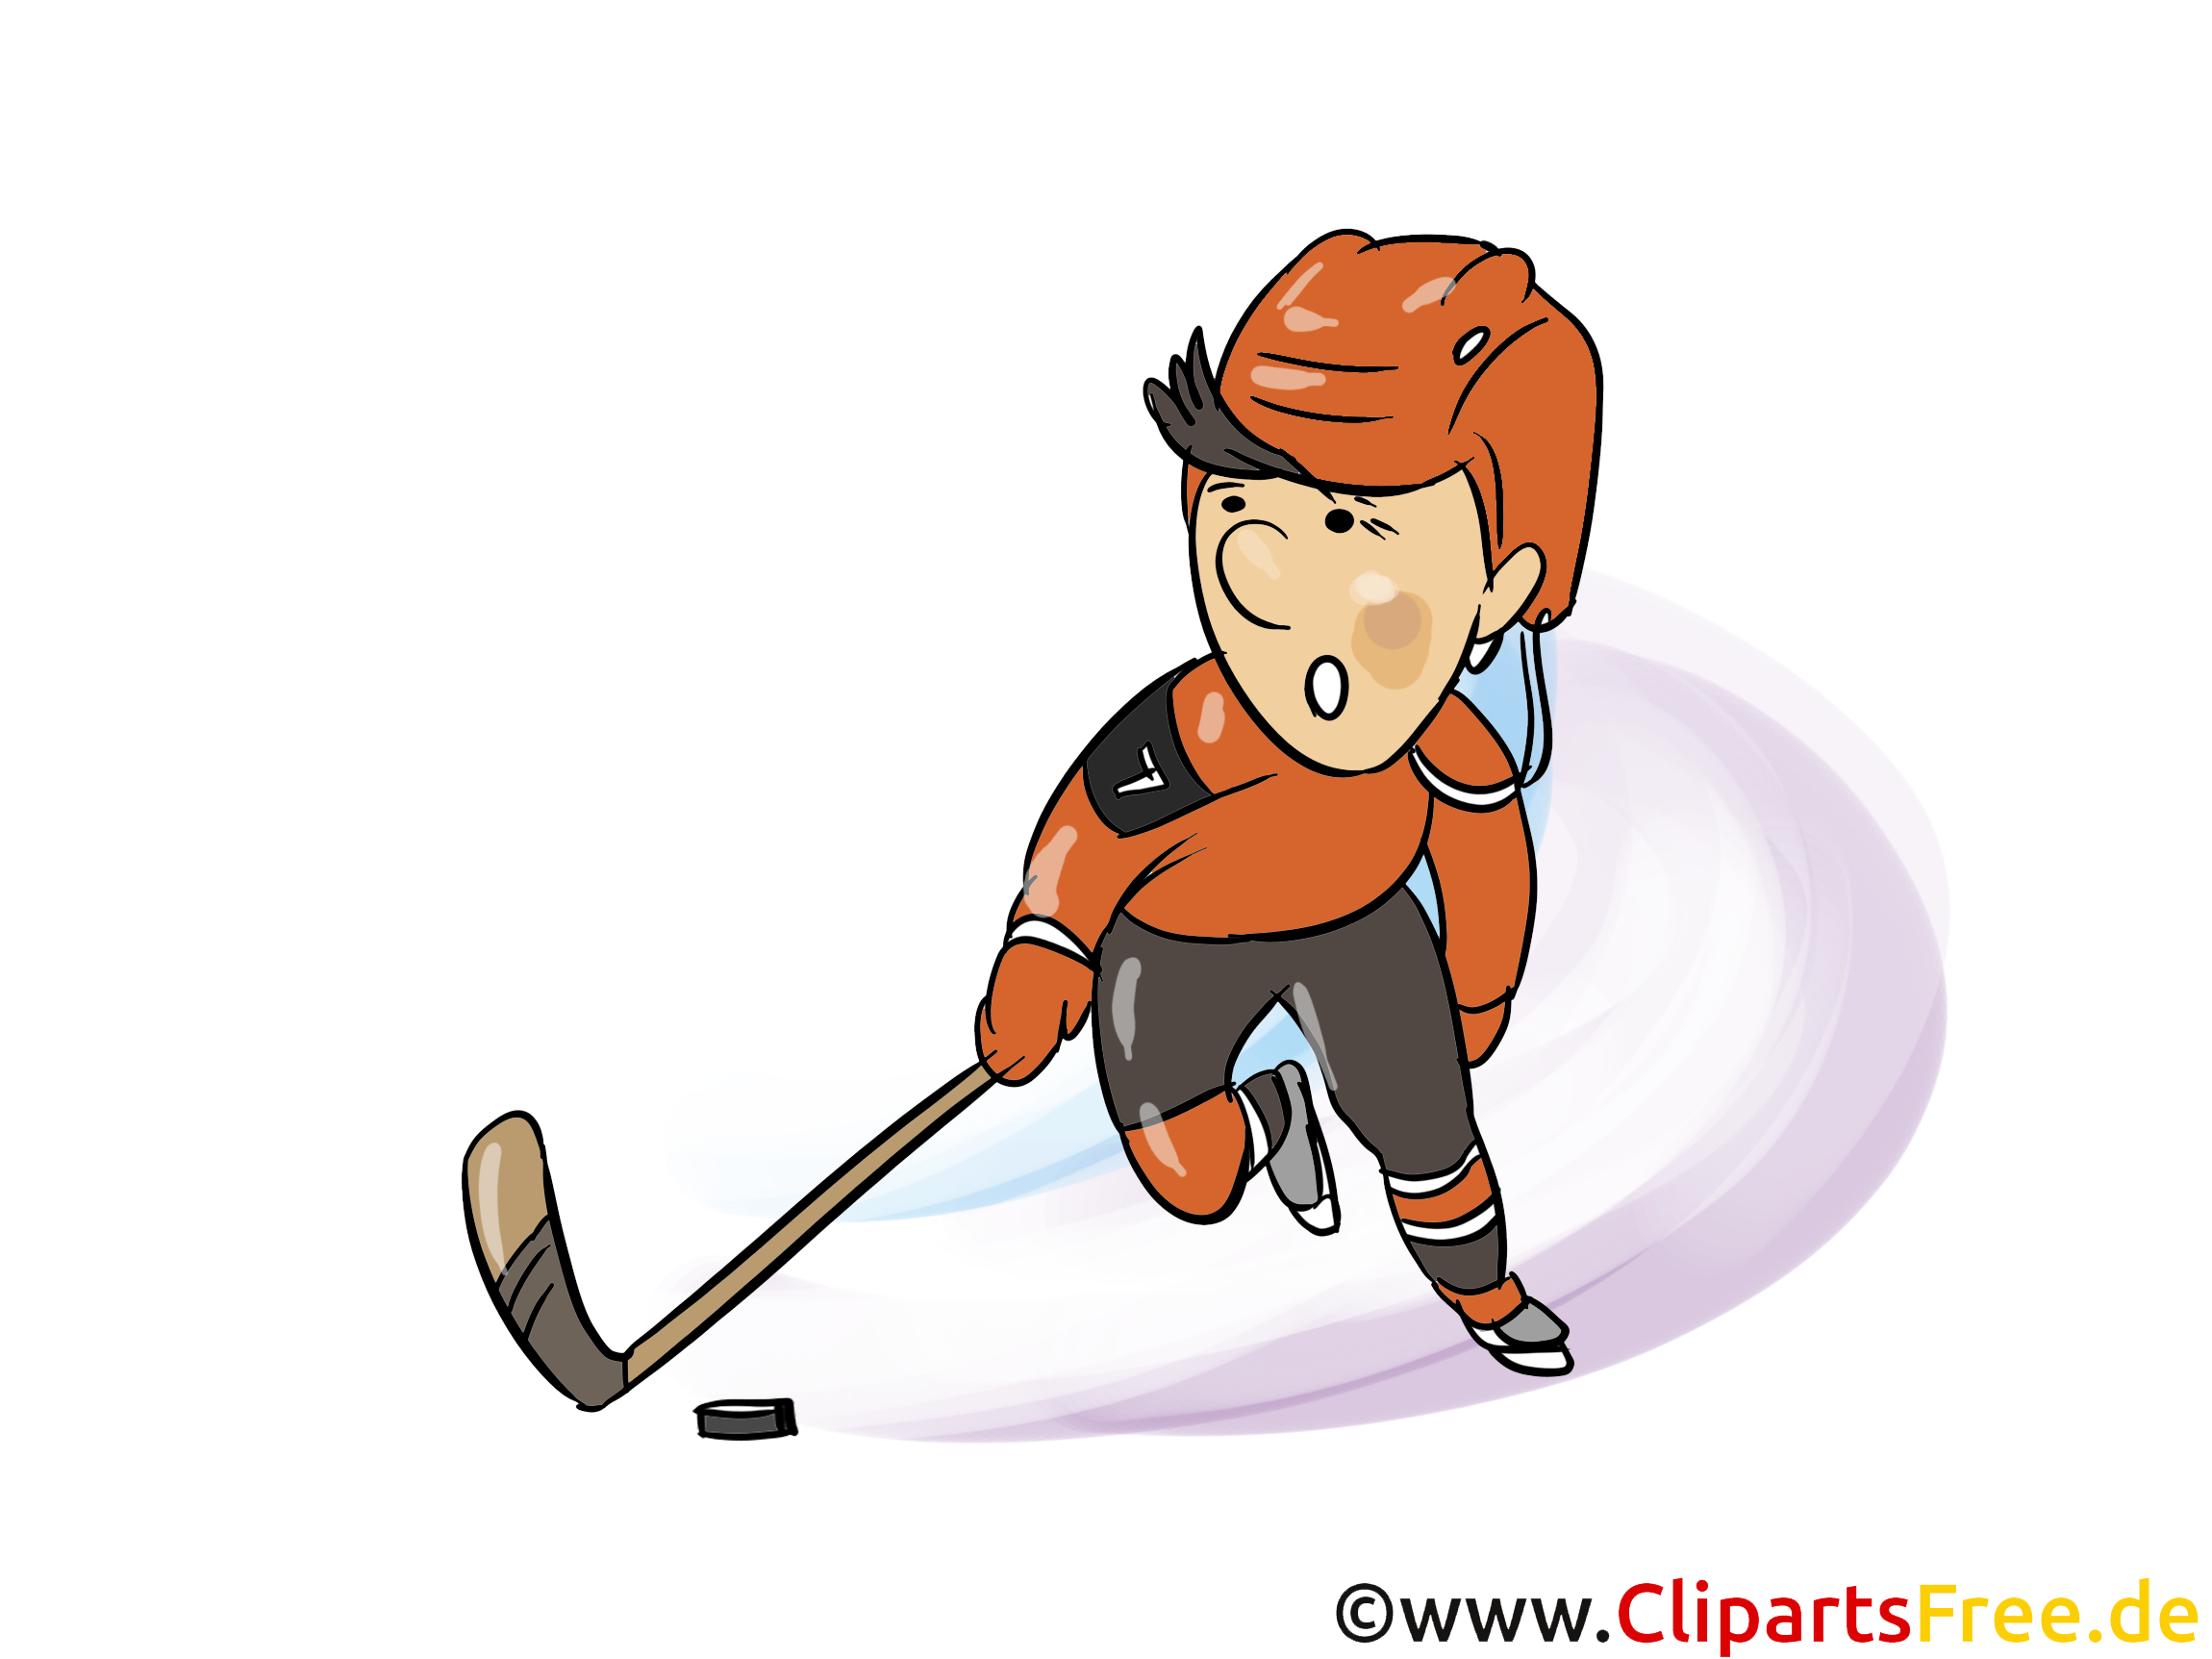 Cross illustration - Hockey images